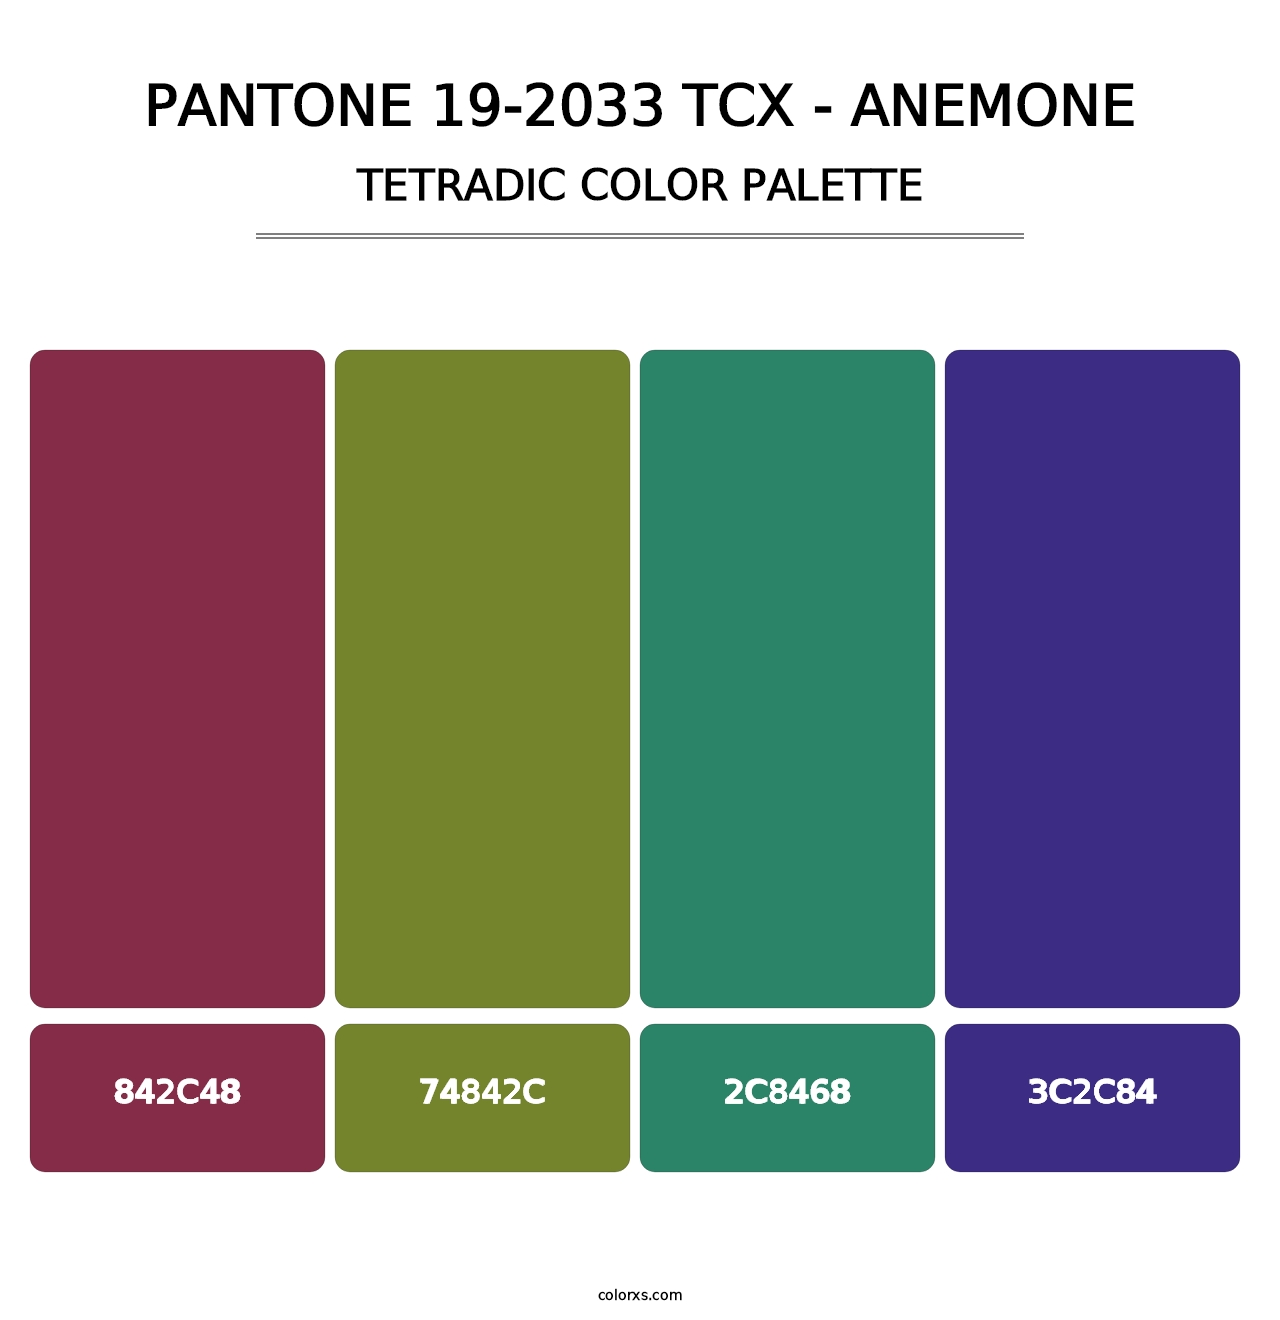 PANTONE 19-2033 TCX - Anemone - Tetradic Color Palette